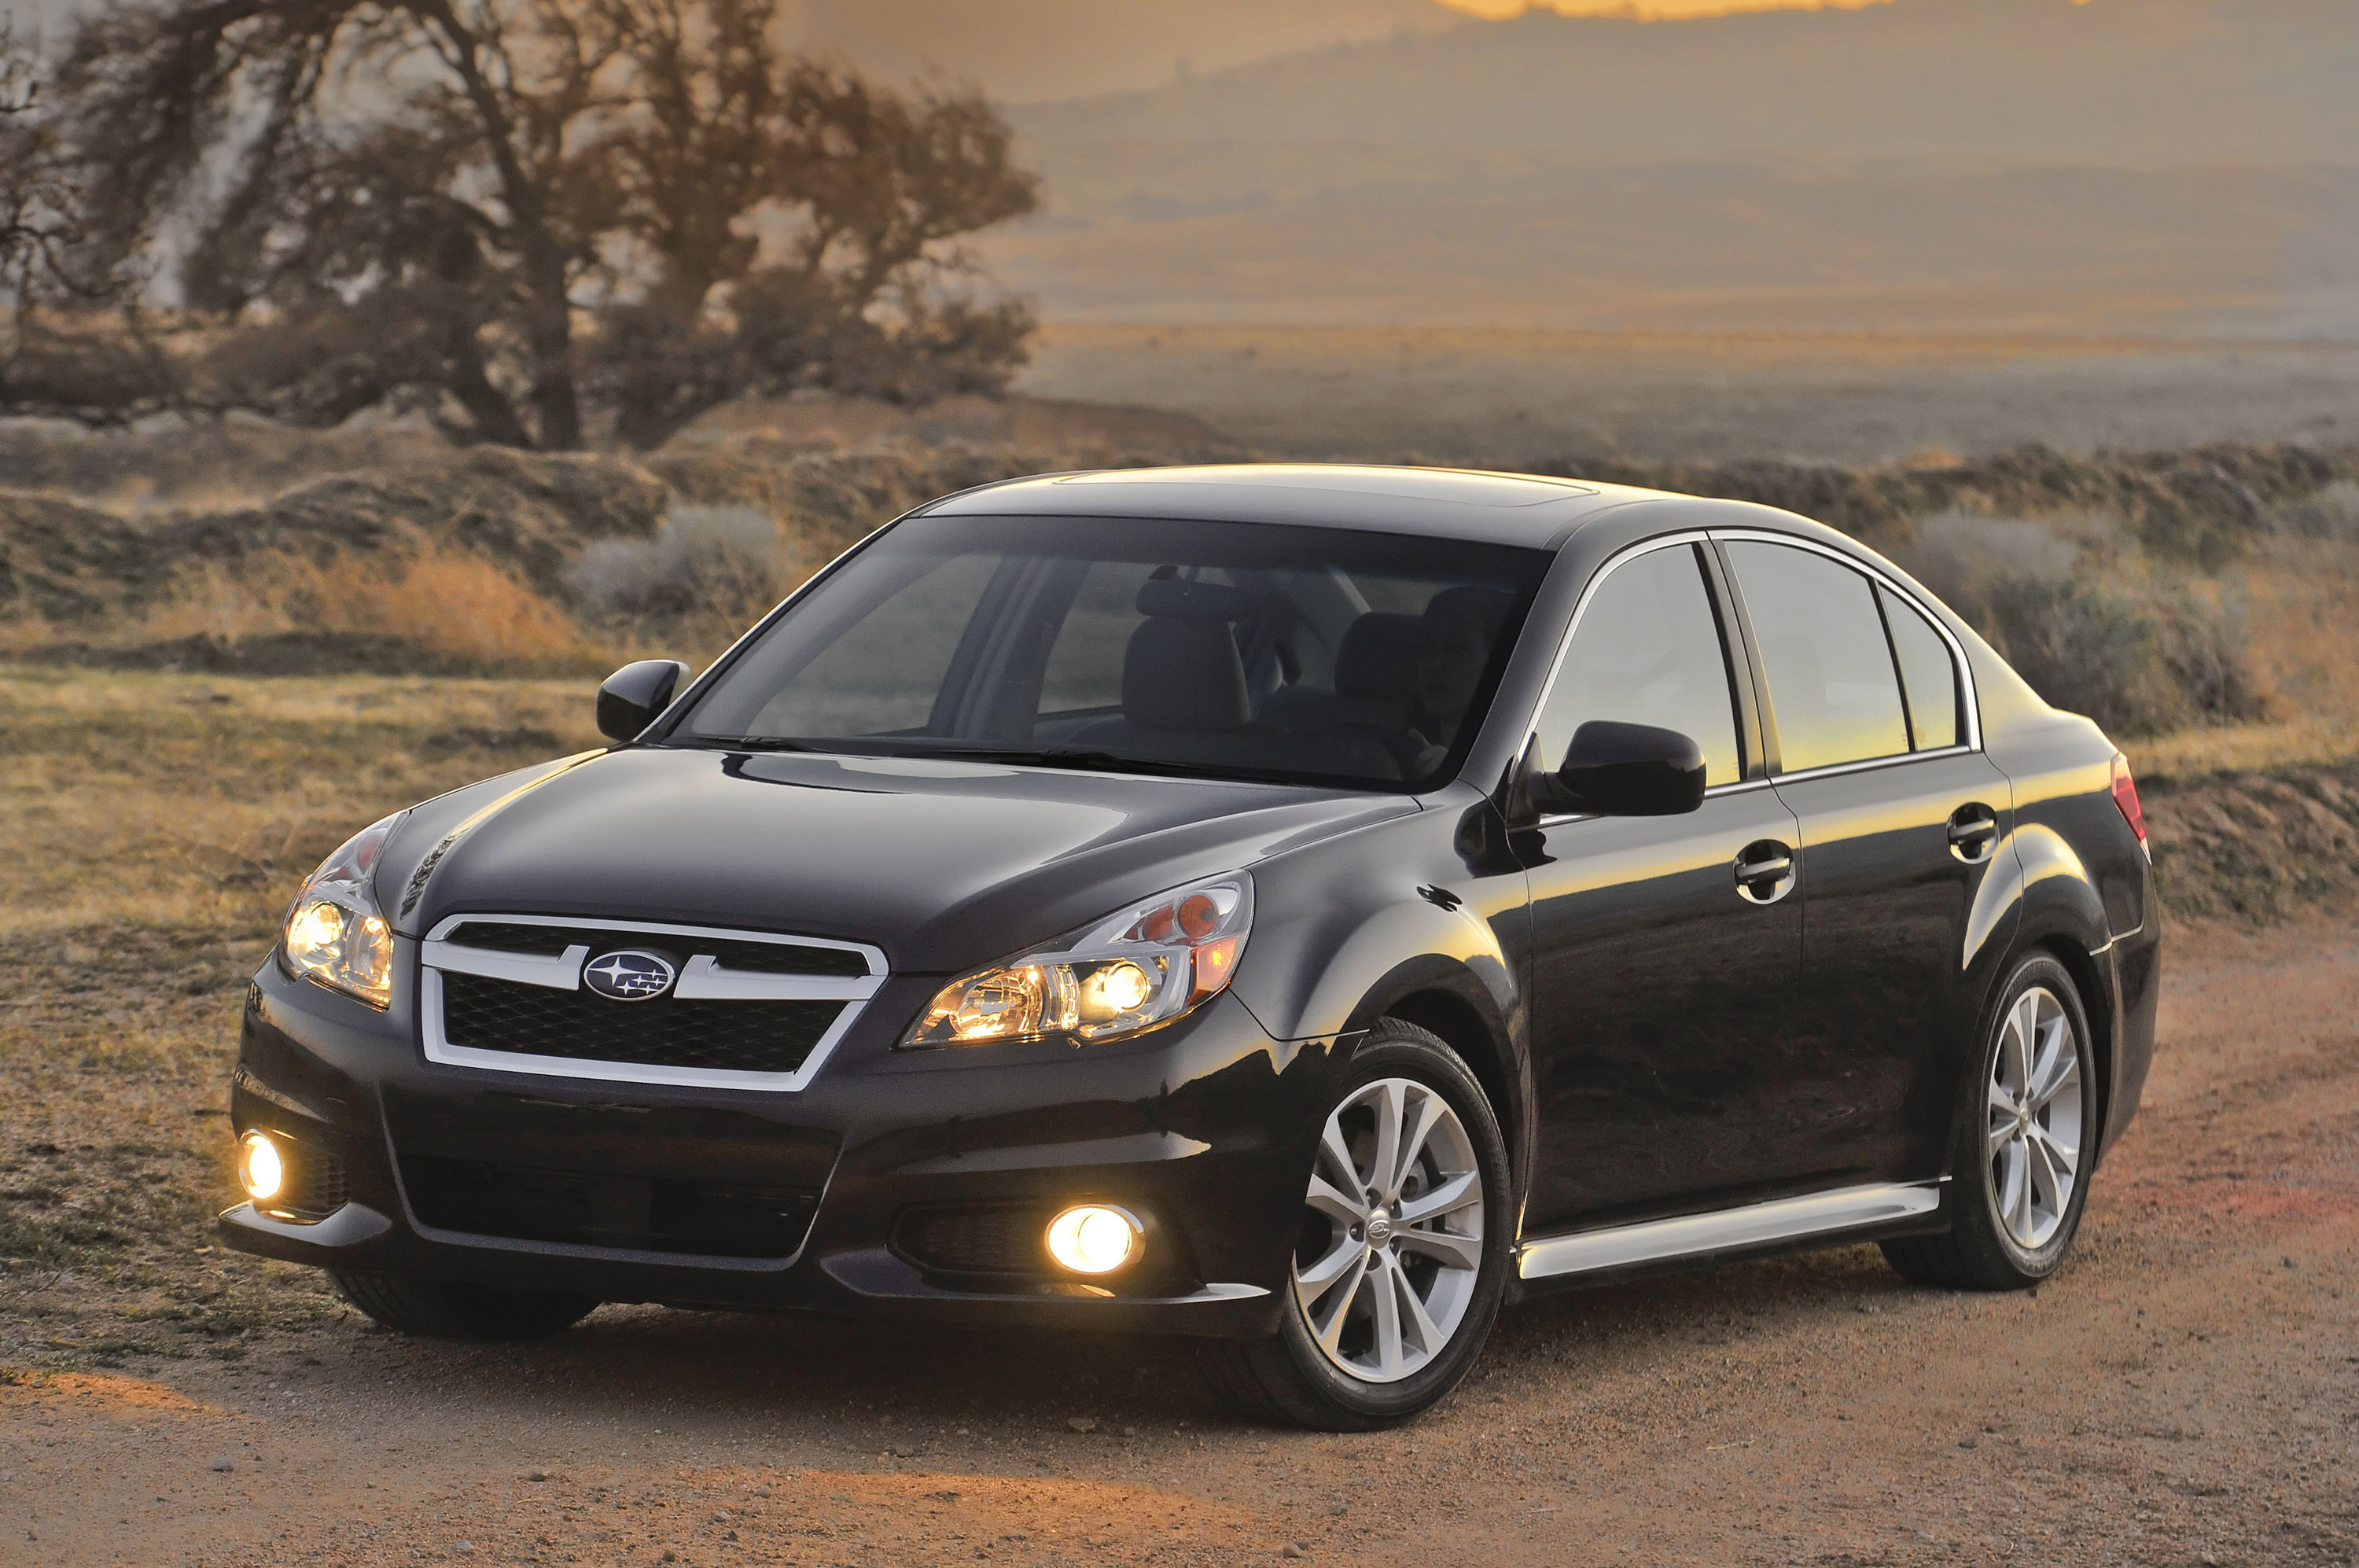 2013 Subaru Legacy - HD Pictures @ carsinvasion.com